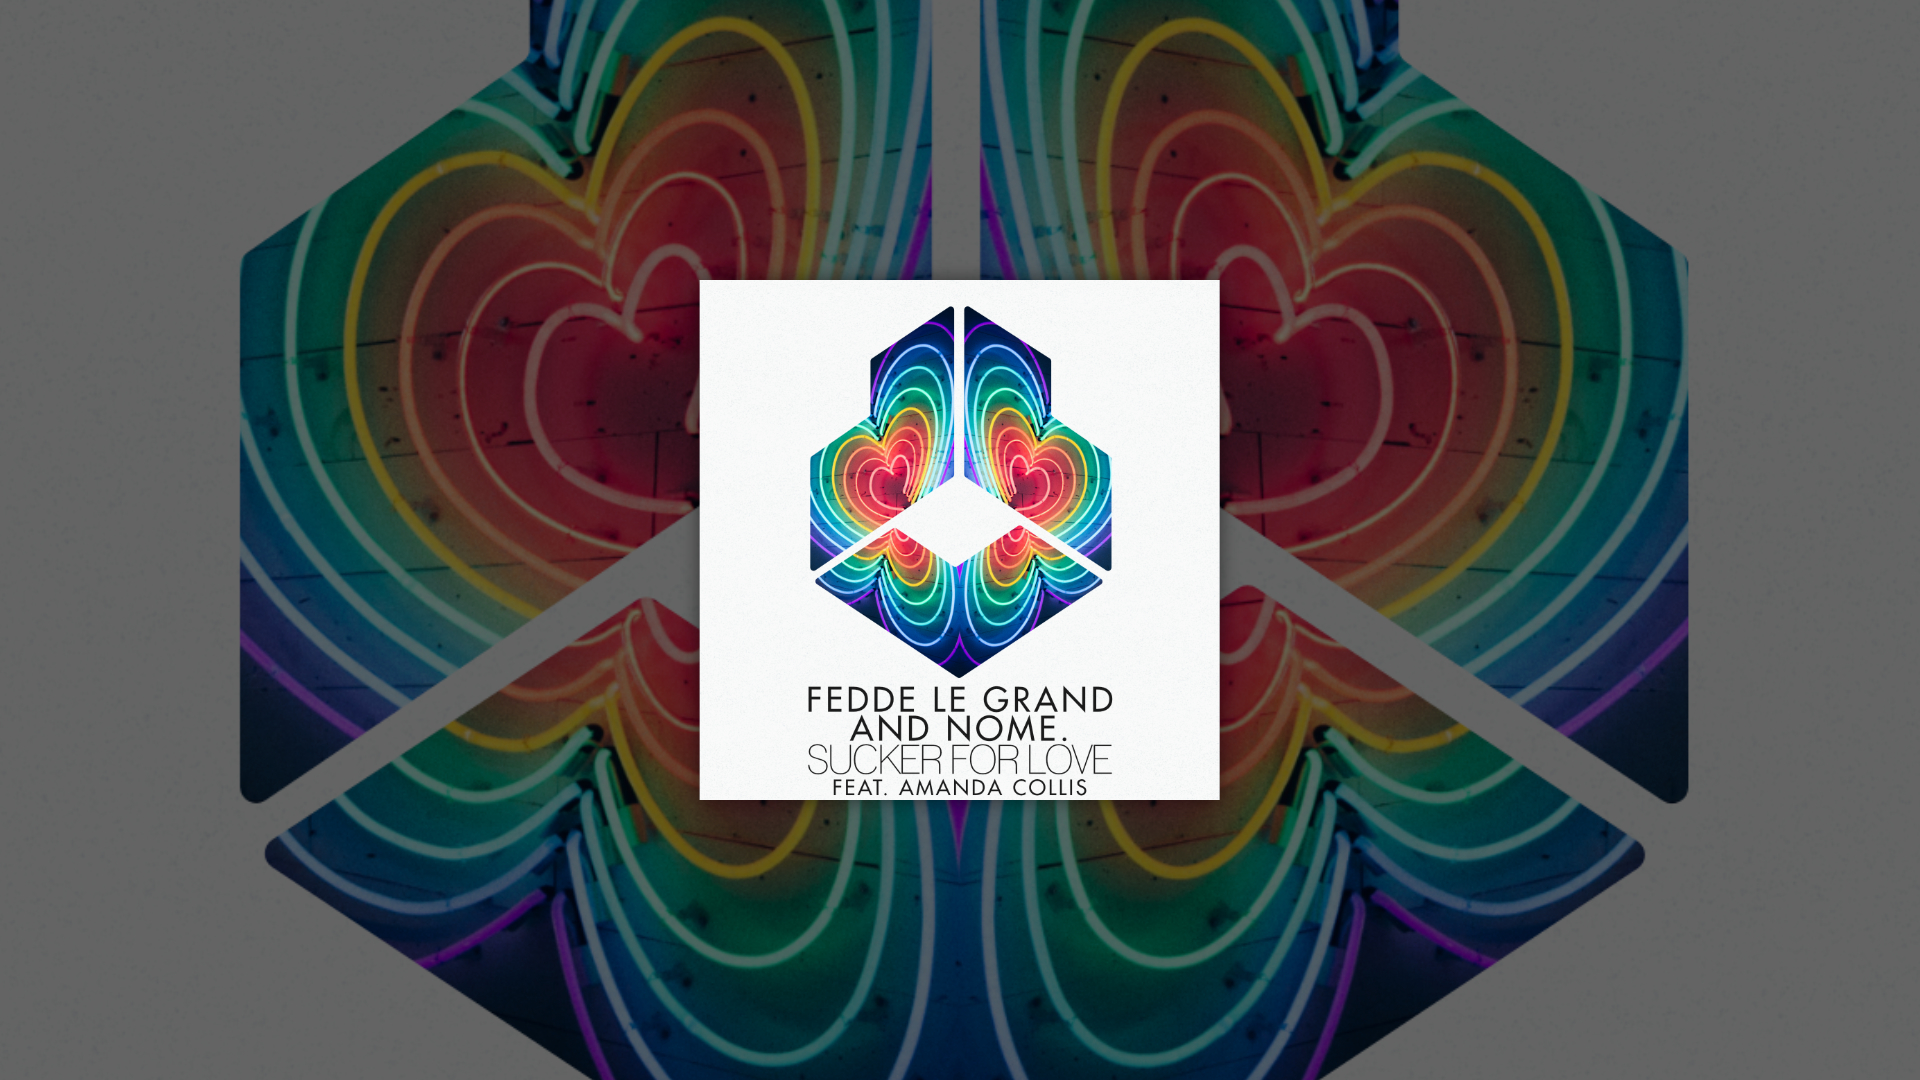 Fedde Le Grand and NOME. - Sucker For Love (feat. Amanda Collis)